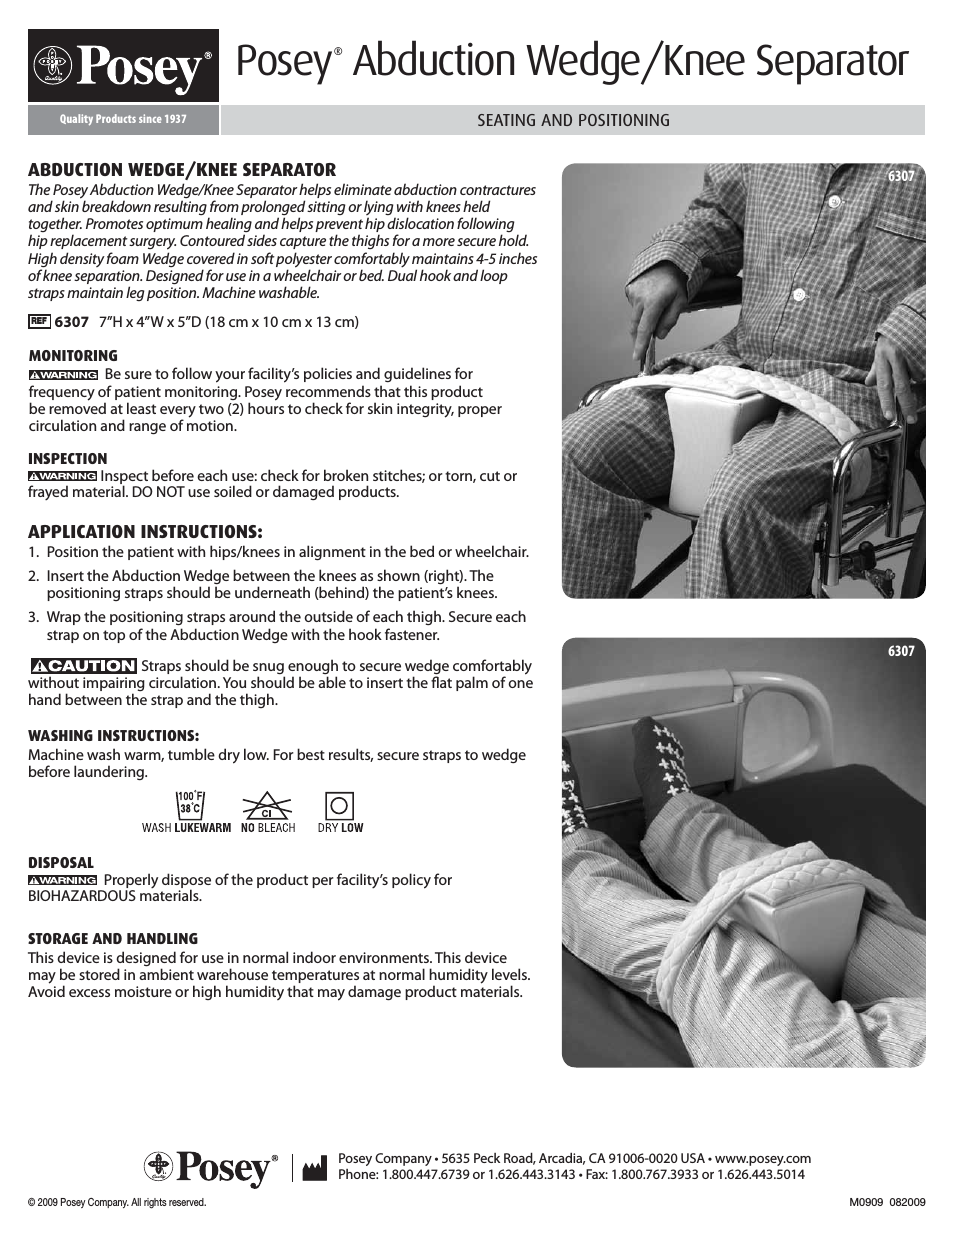 Abduction Wedge / Knee Separator